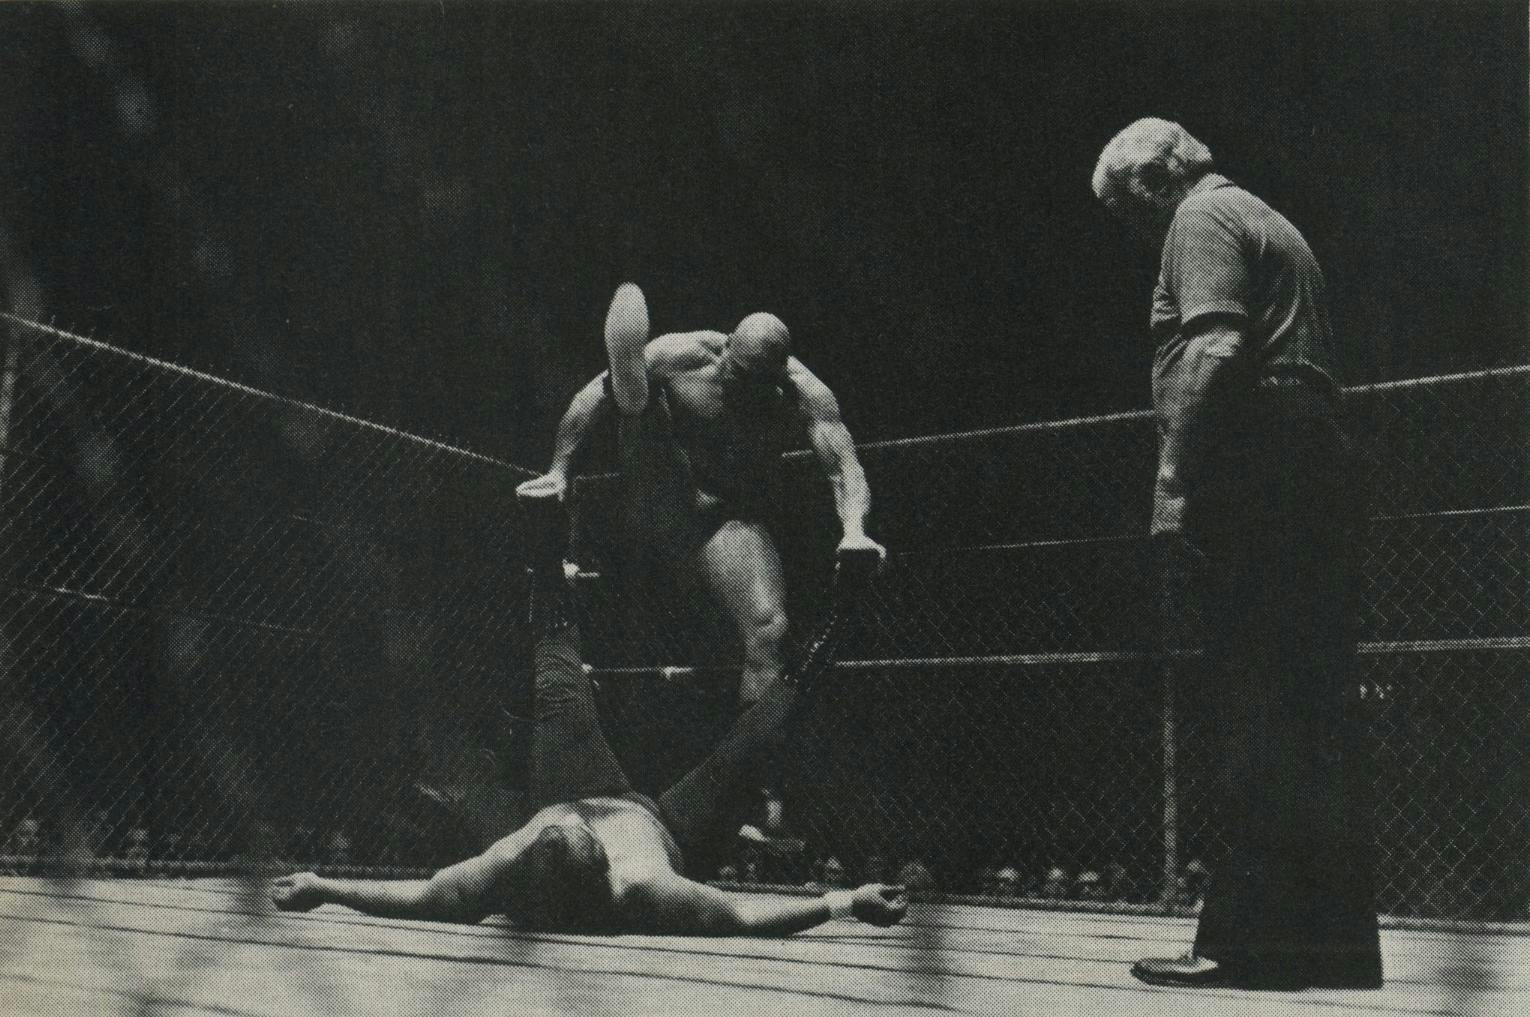 Stomper applies famous technique to fallen Lothario.